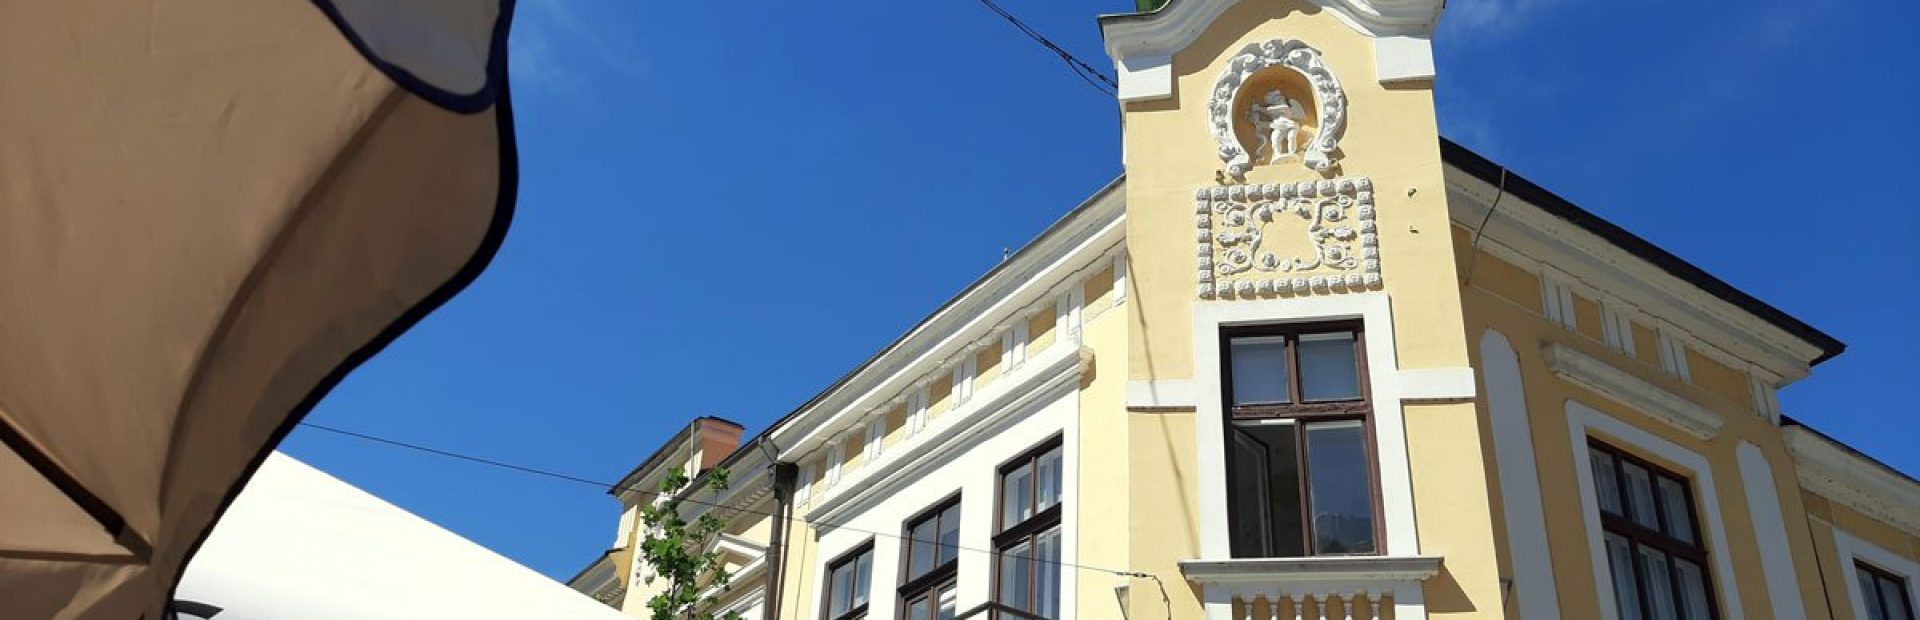 Art-Nouveau-building-Kragujevac-Serbia-Glimpses-of-the-World